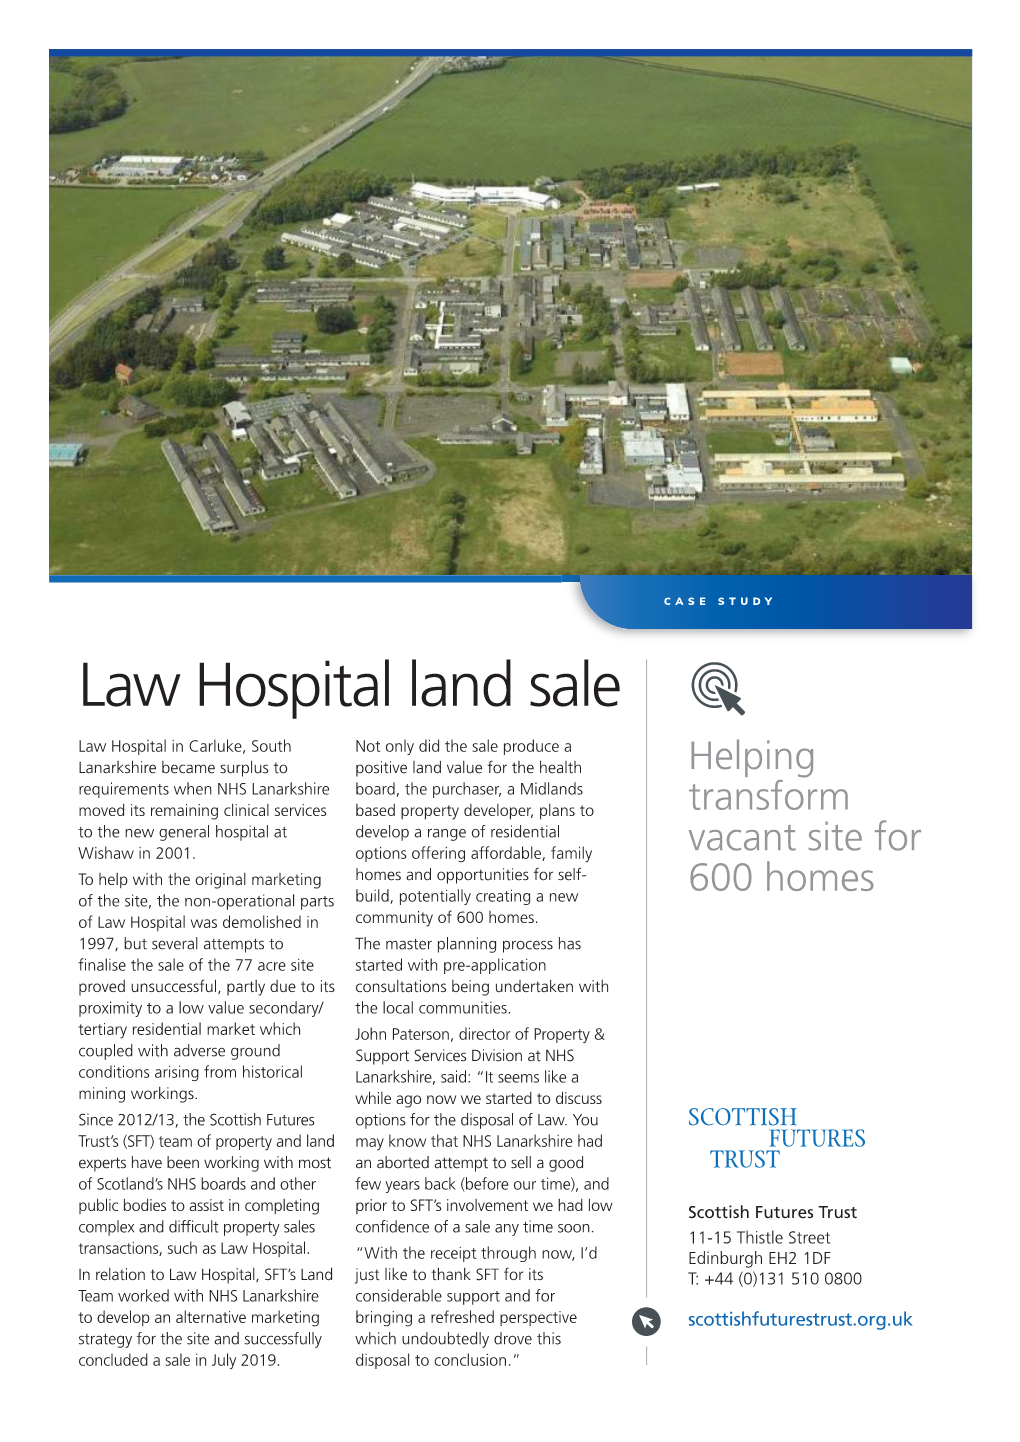 Law Hospital Land Sale